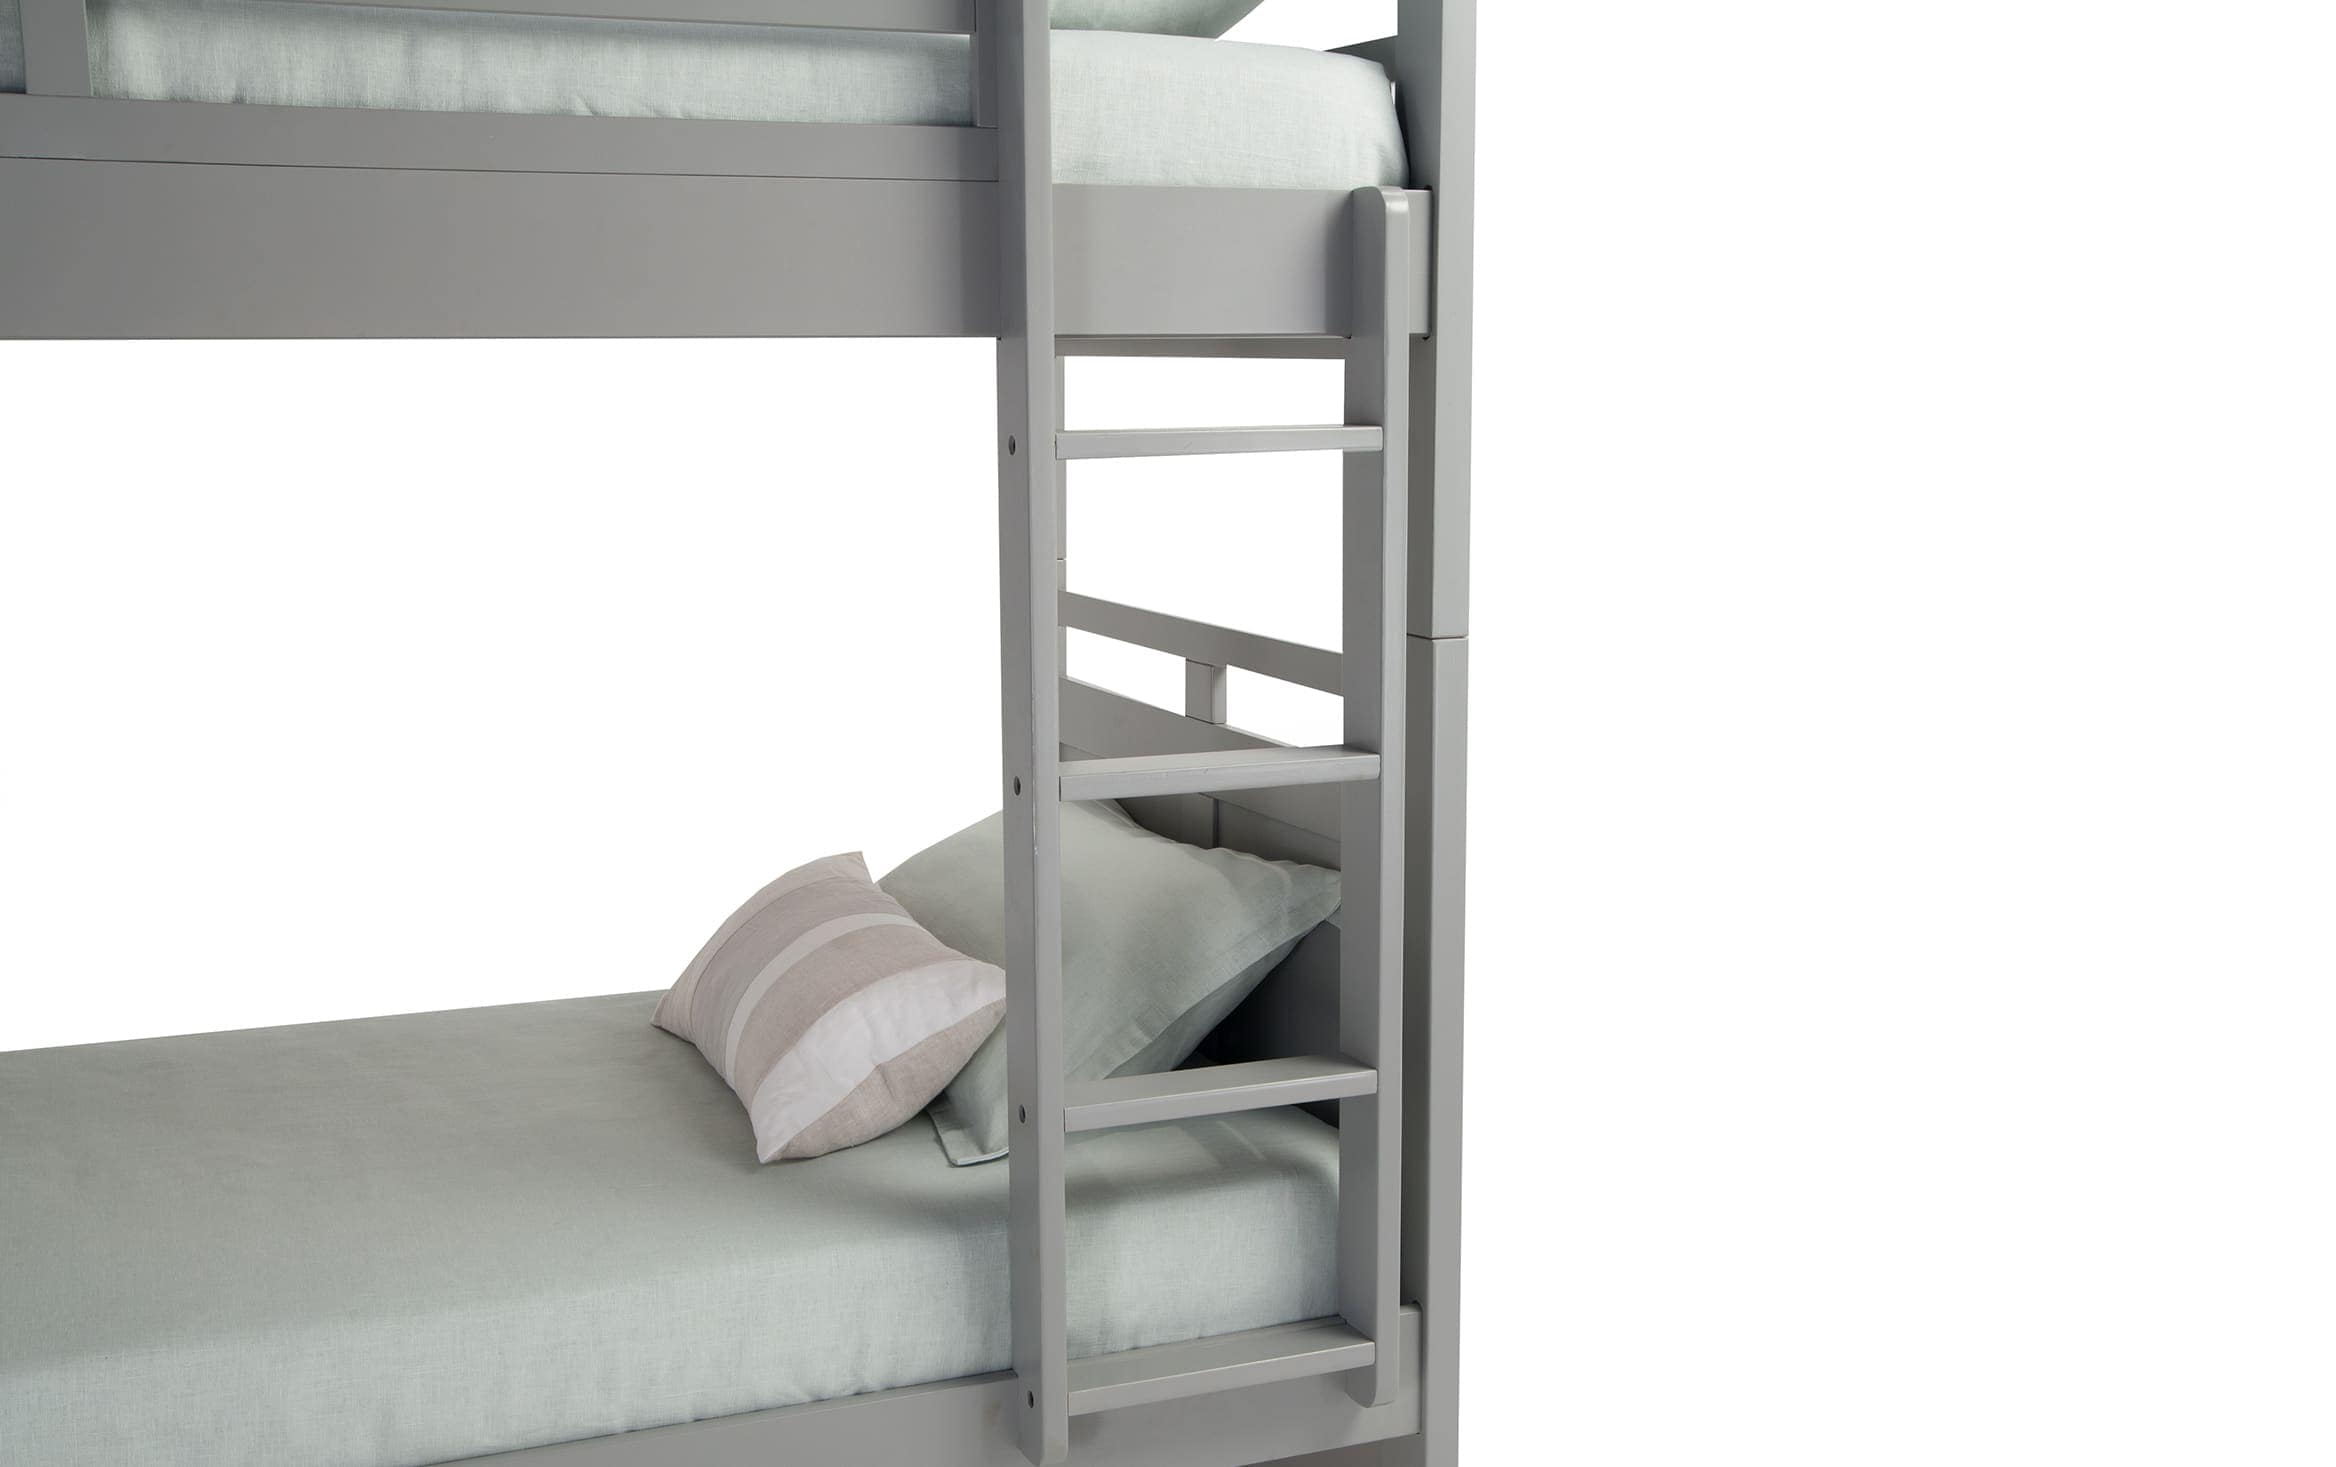 chadwick bunk bed